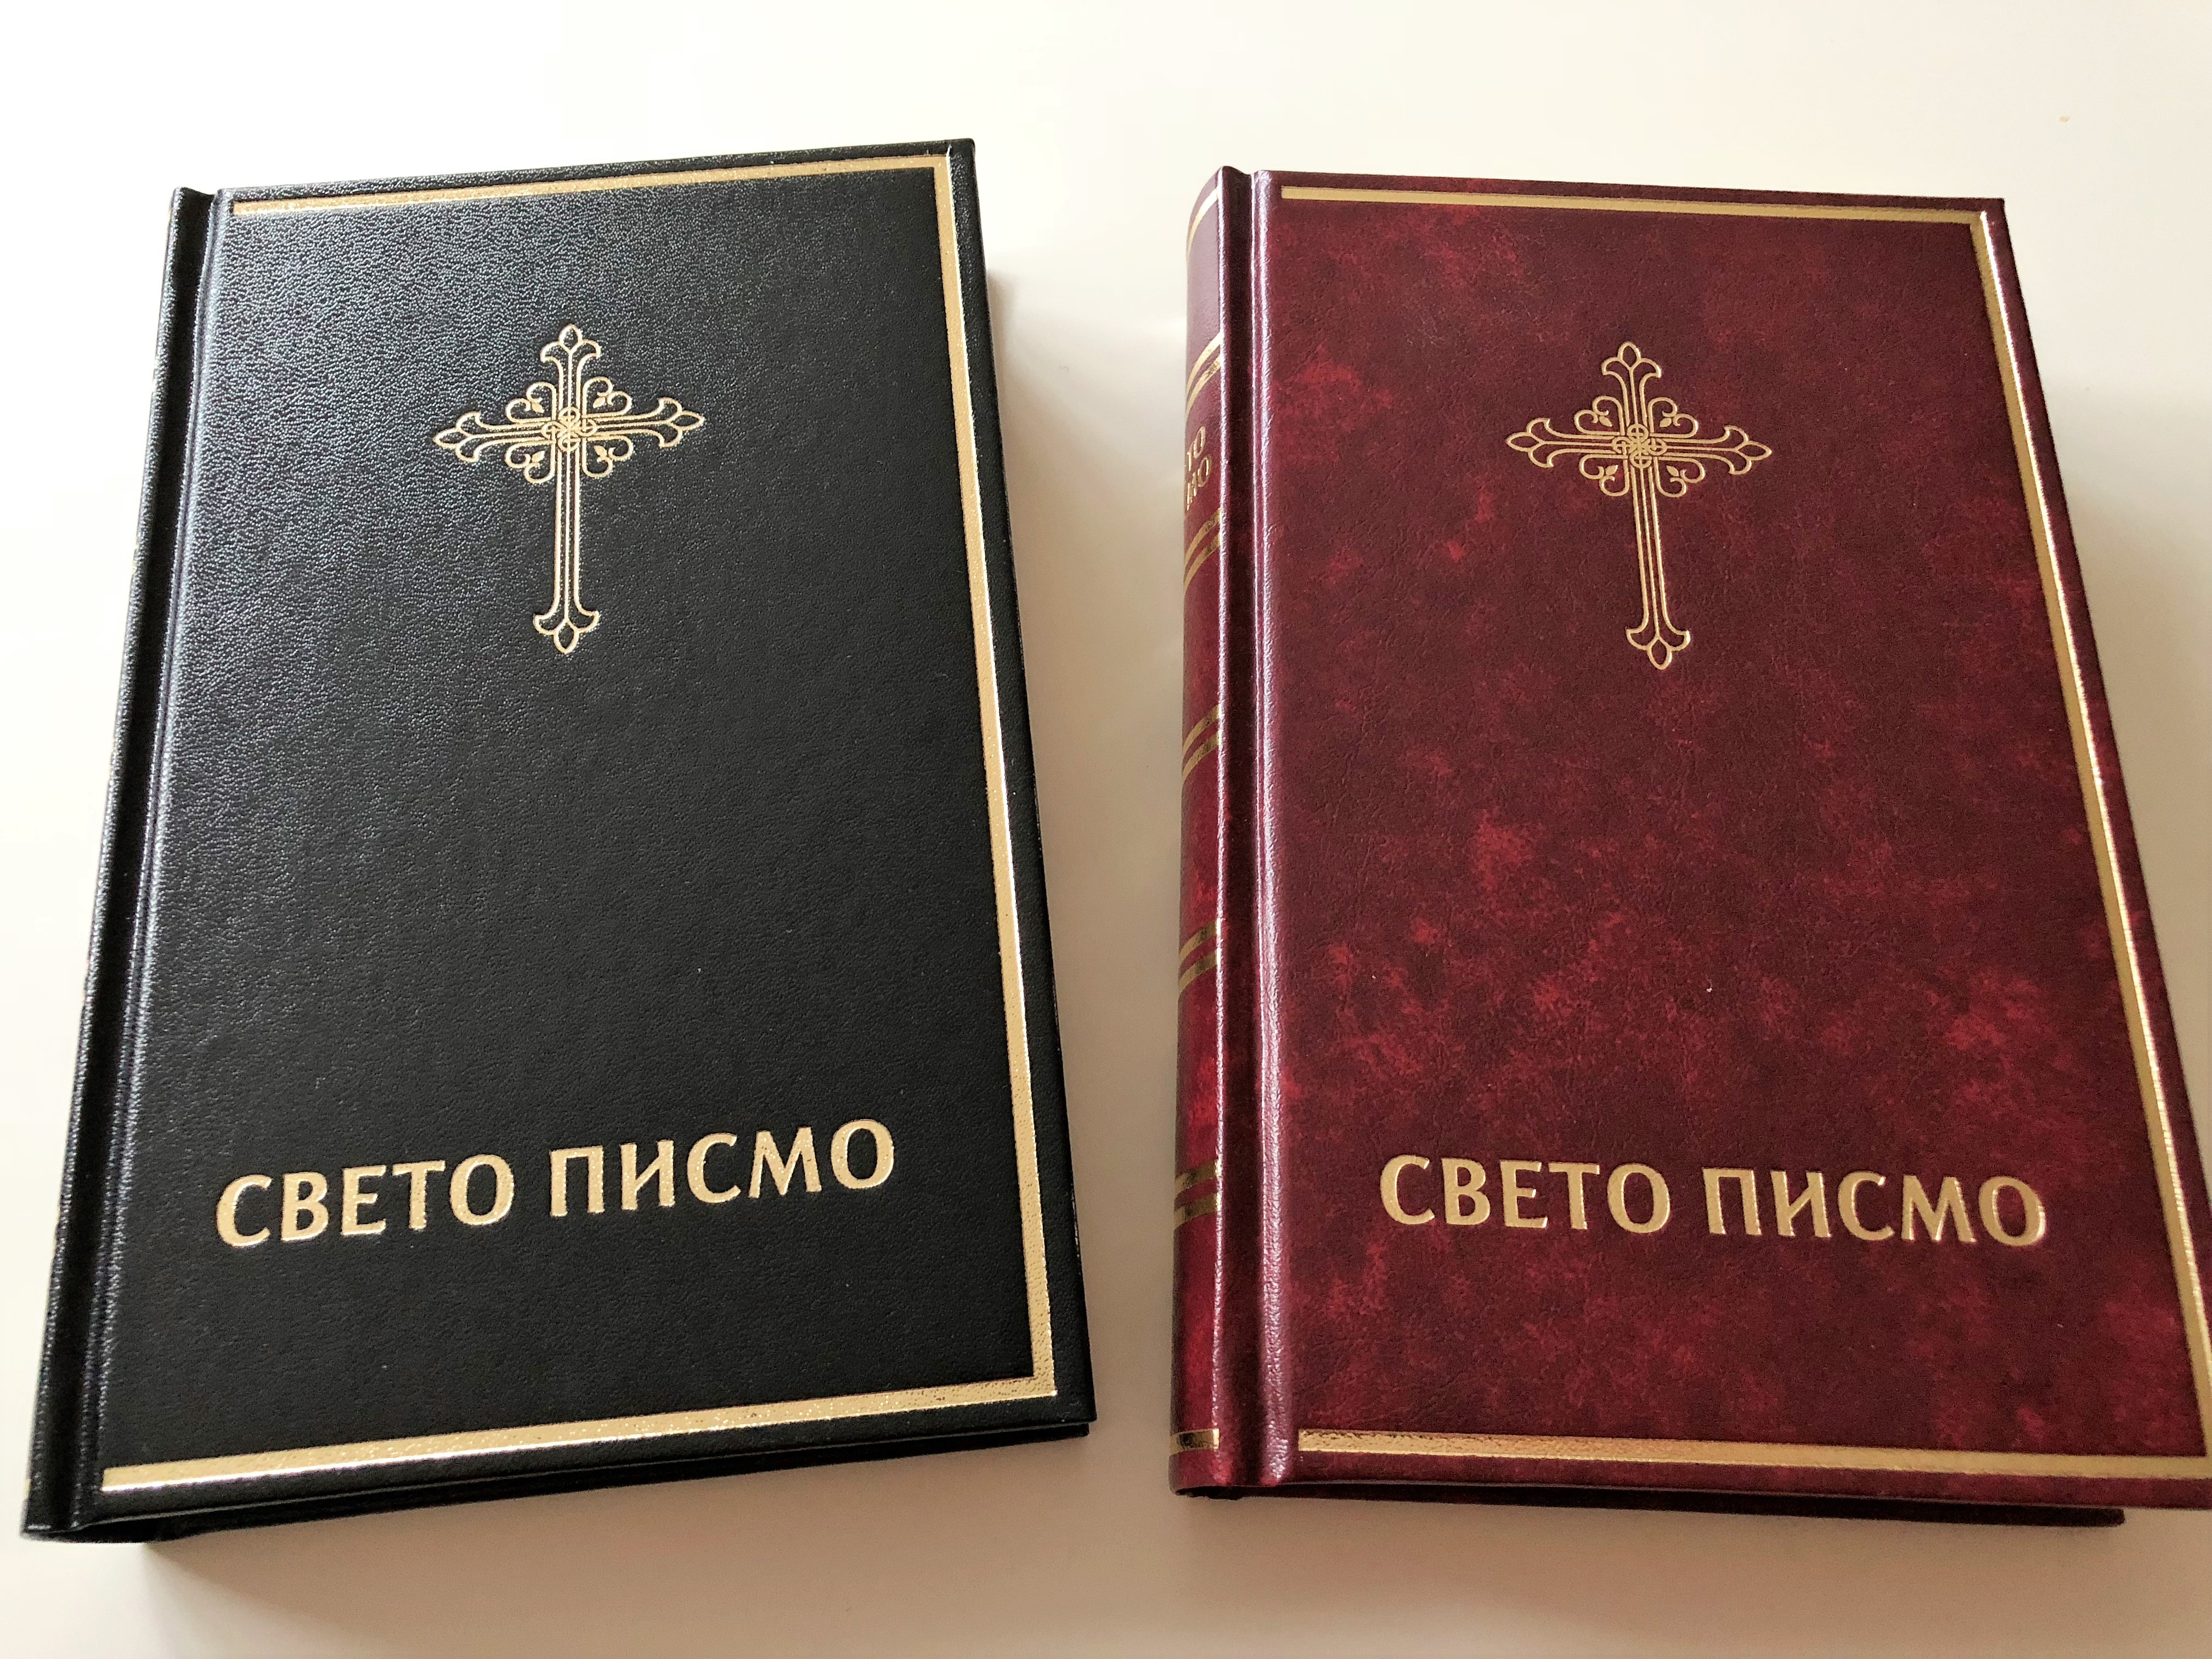 serbian-language-bible-burgundy-cover-with-golden-cross-cyrillic-script-043hs-2-.jpg